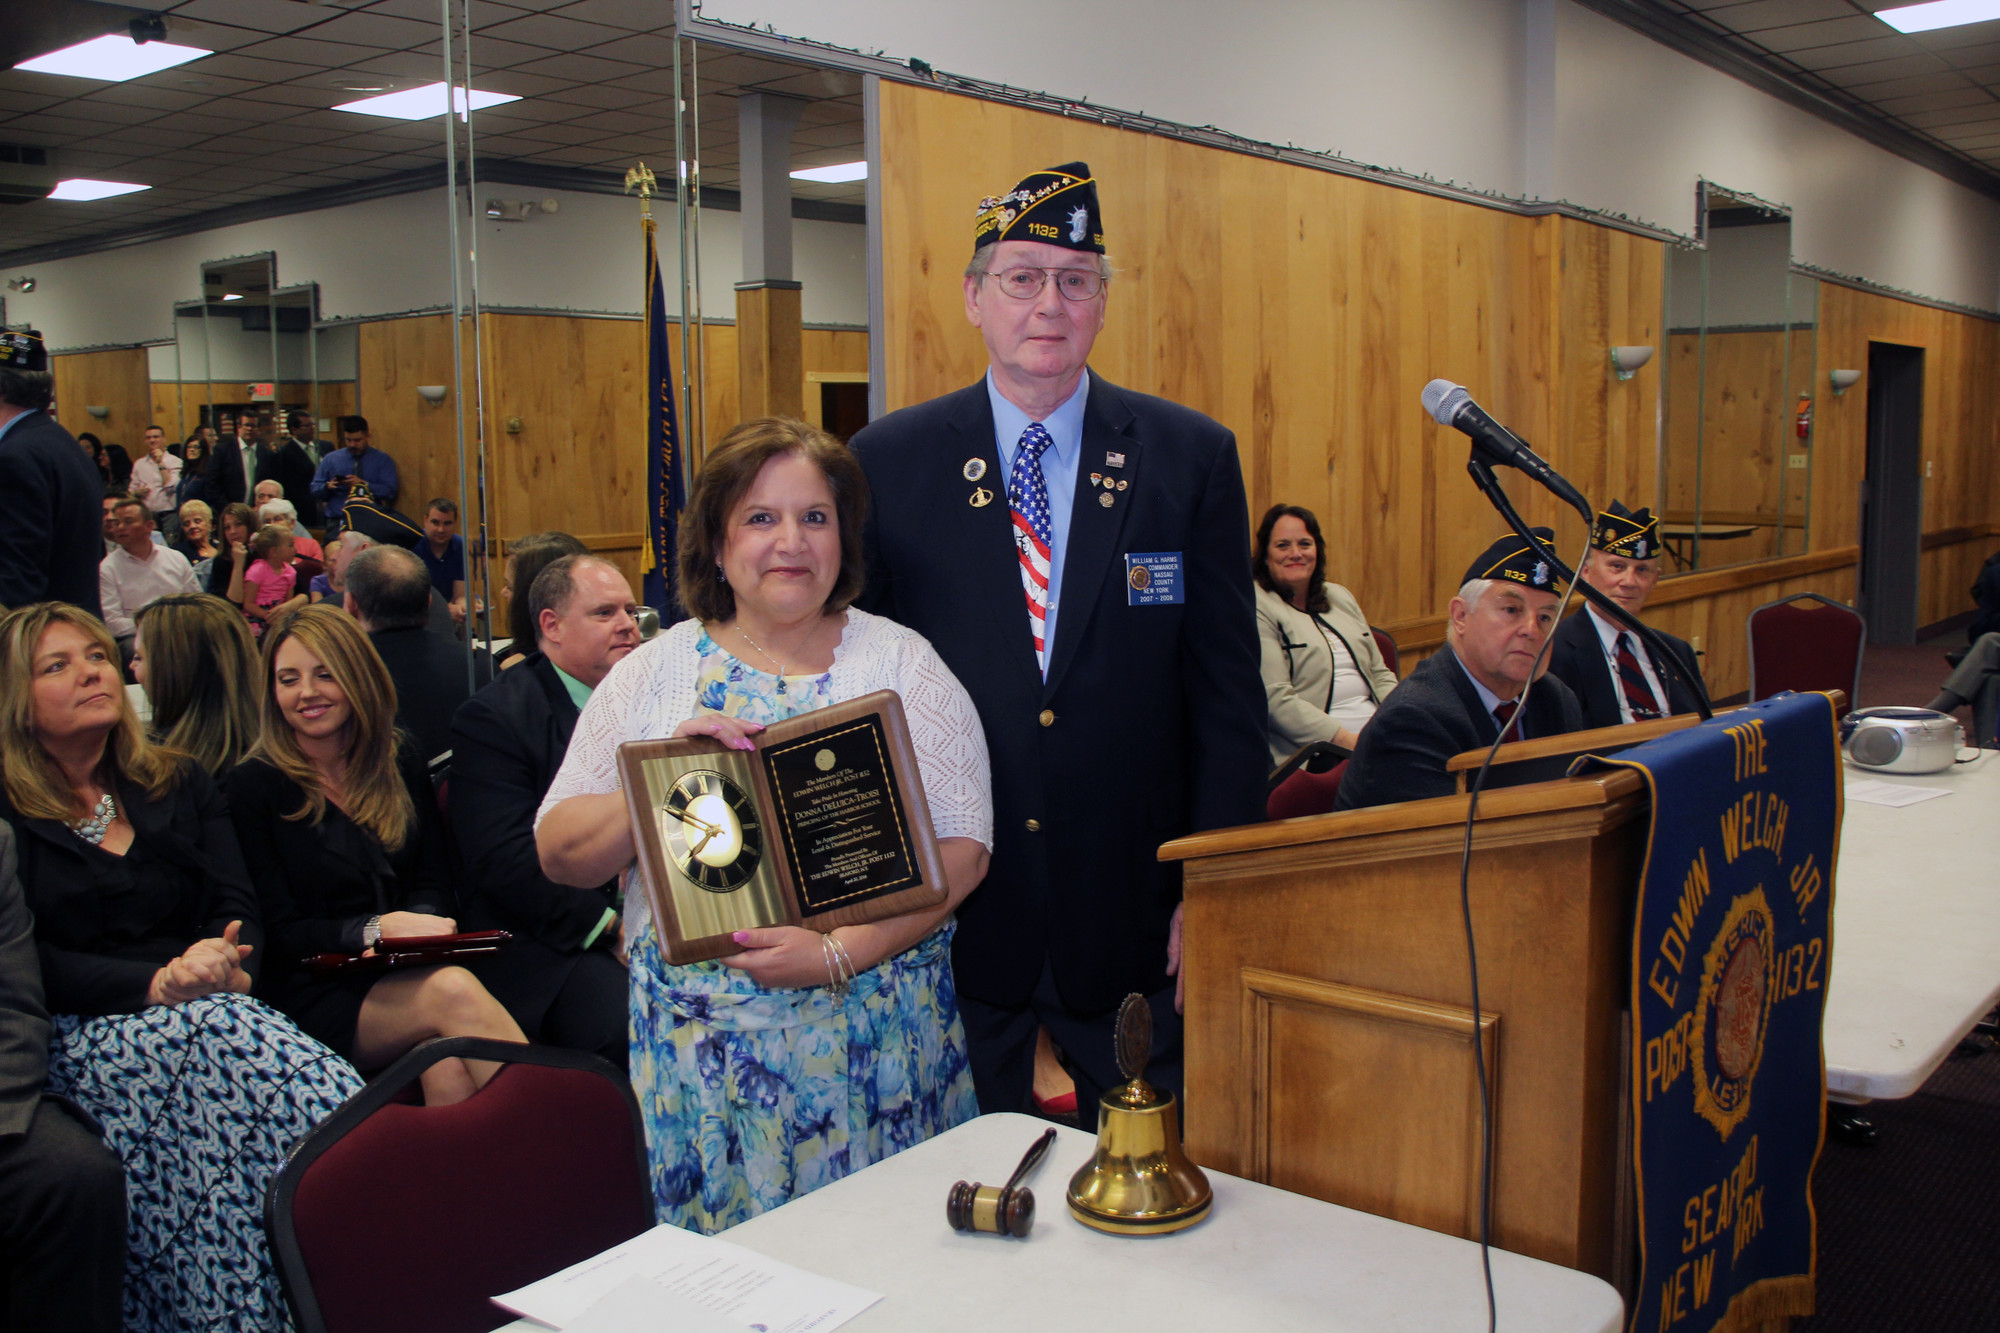 American Legion Commander William Harms presented an award to retiring Seaford Harbor School Principal Donna DeLucia-Troisi.